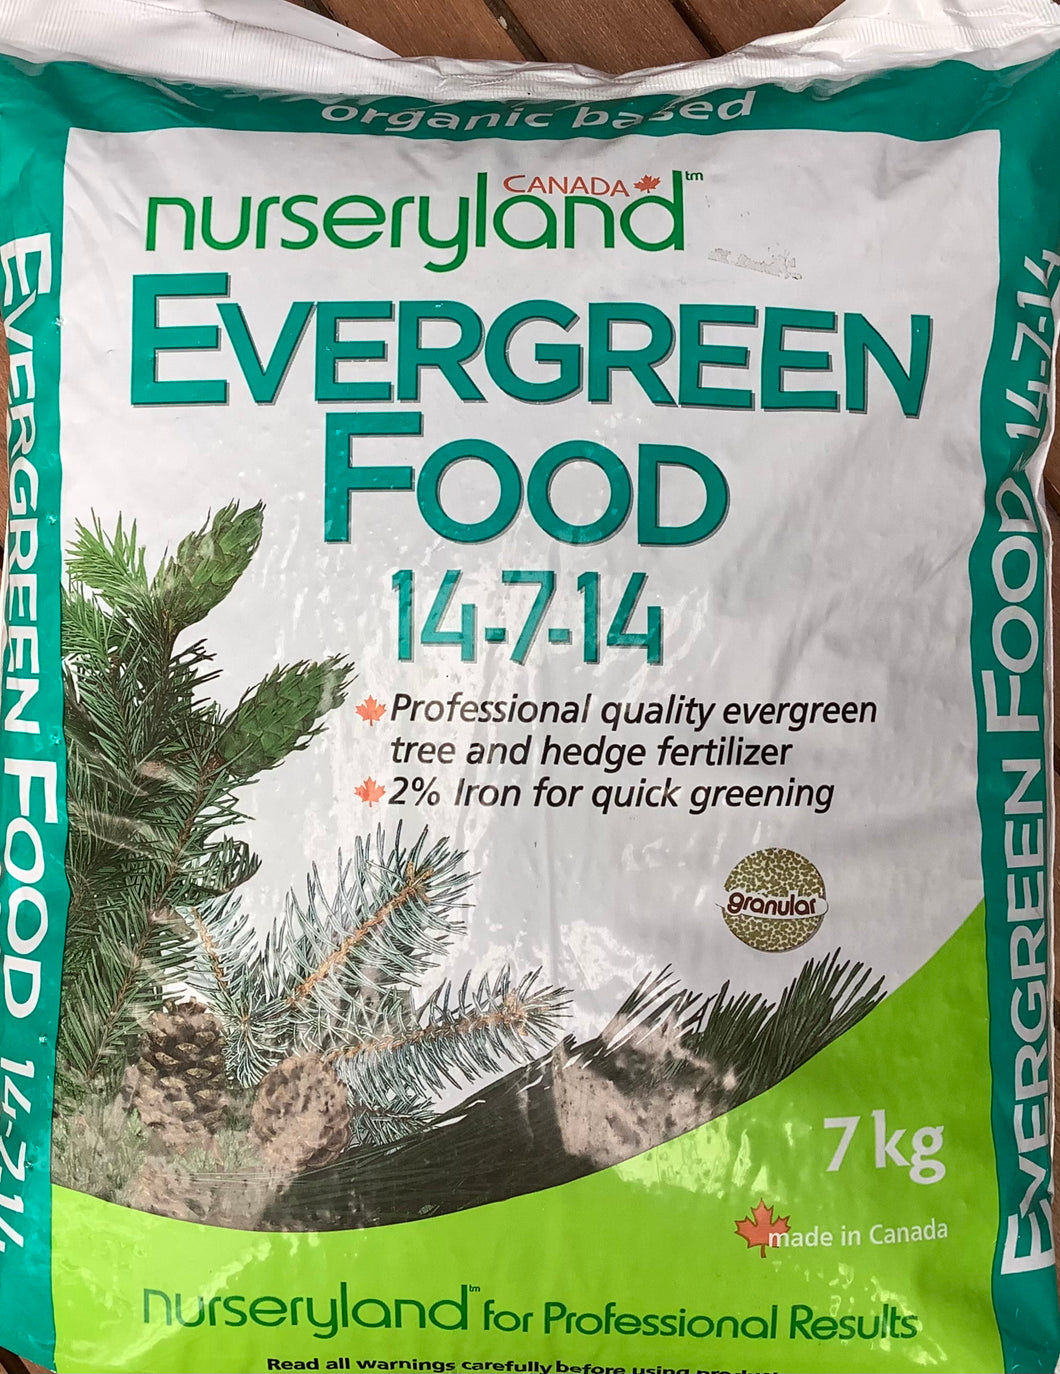 Nurseryland- Evergreen Food 14-7-14 40% SN 15% OM